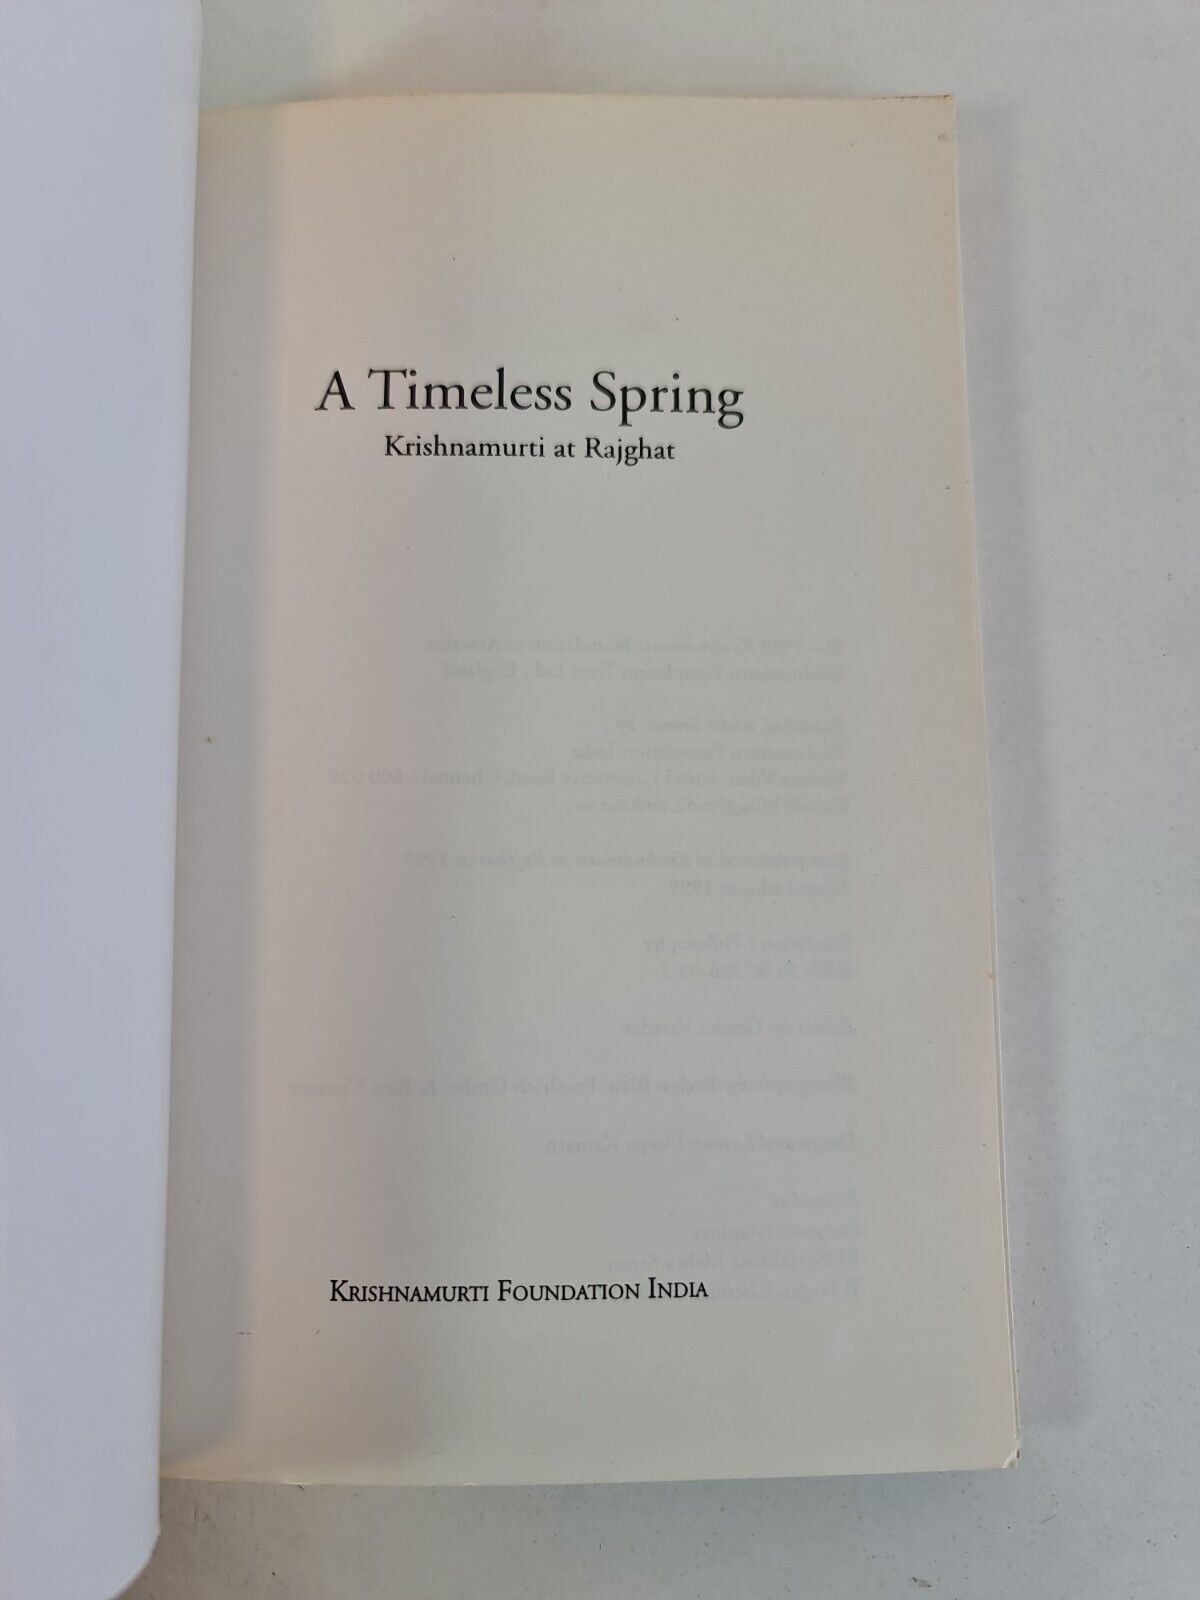 A Timeless Spring by J. Krishnamurti (1999)